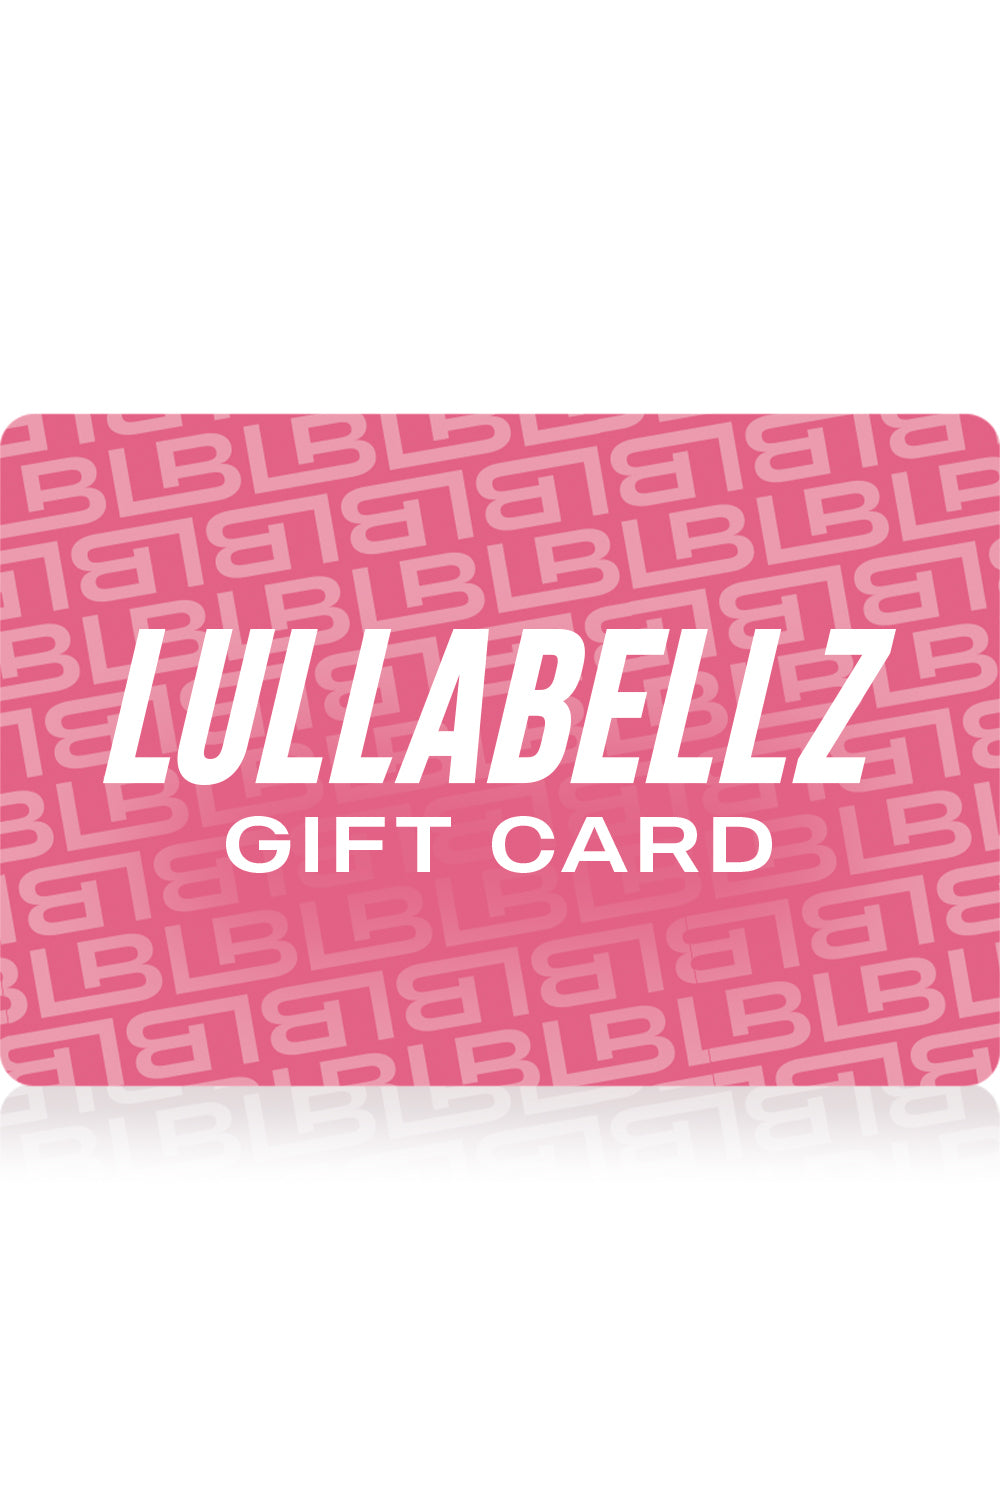 LullaBellz Gift Card - PS200